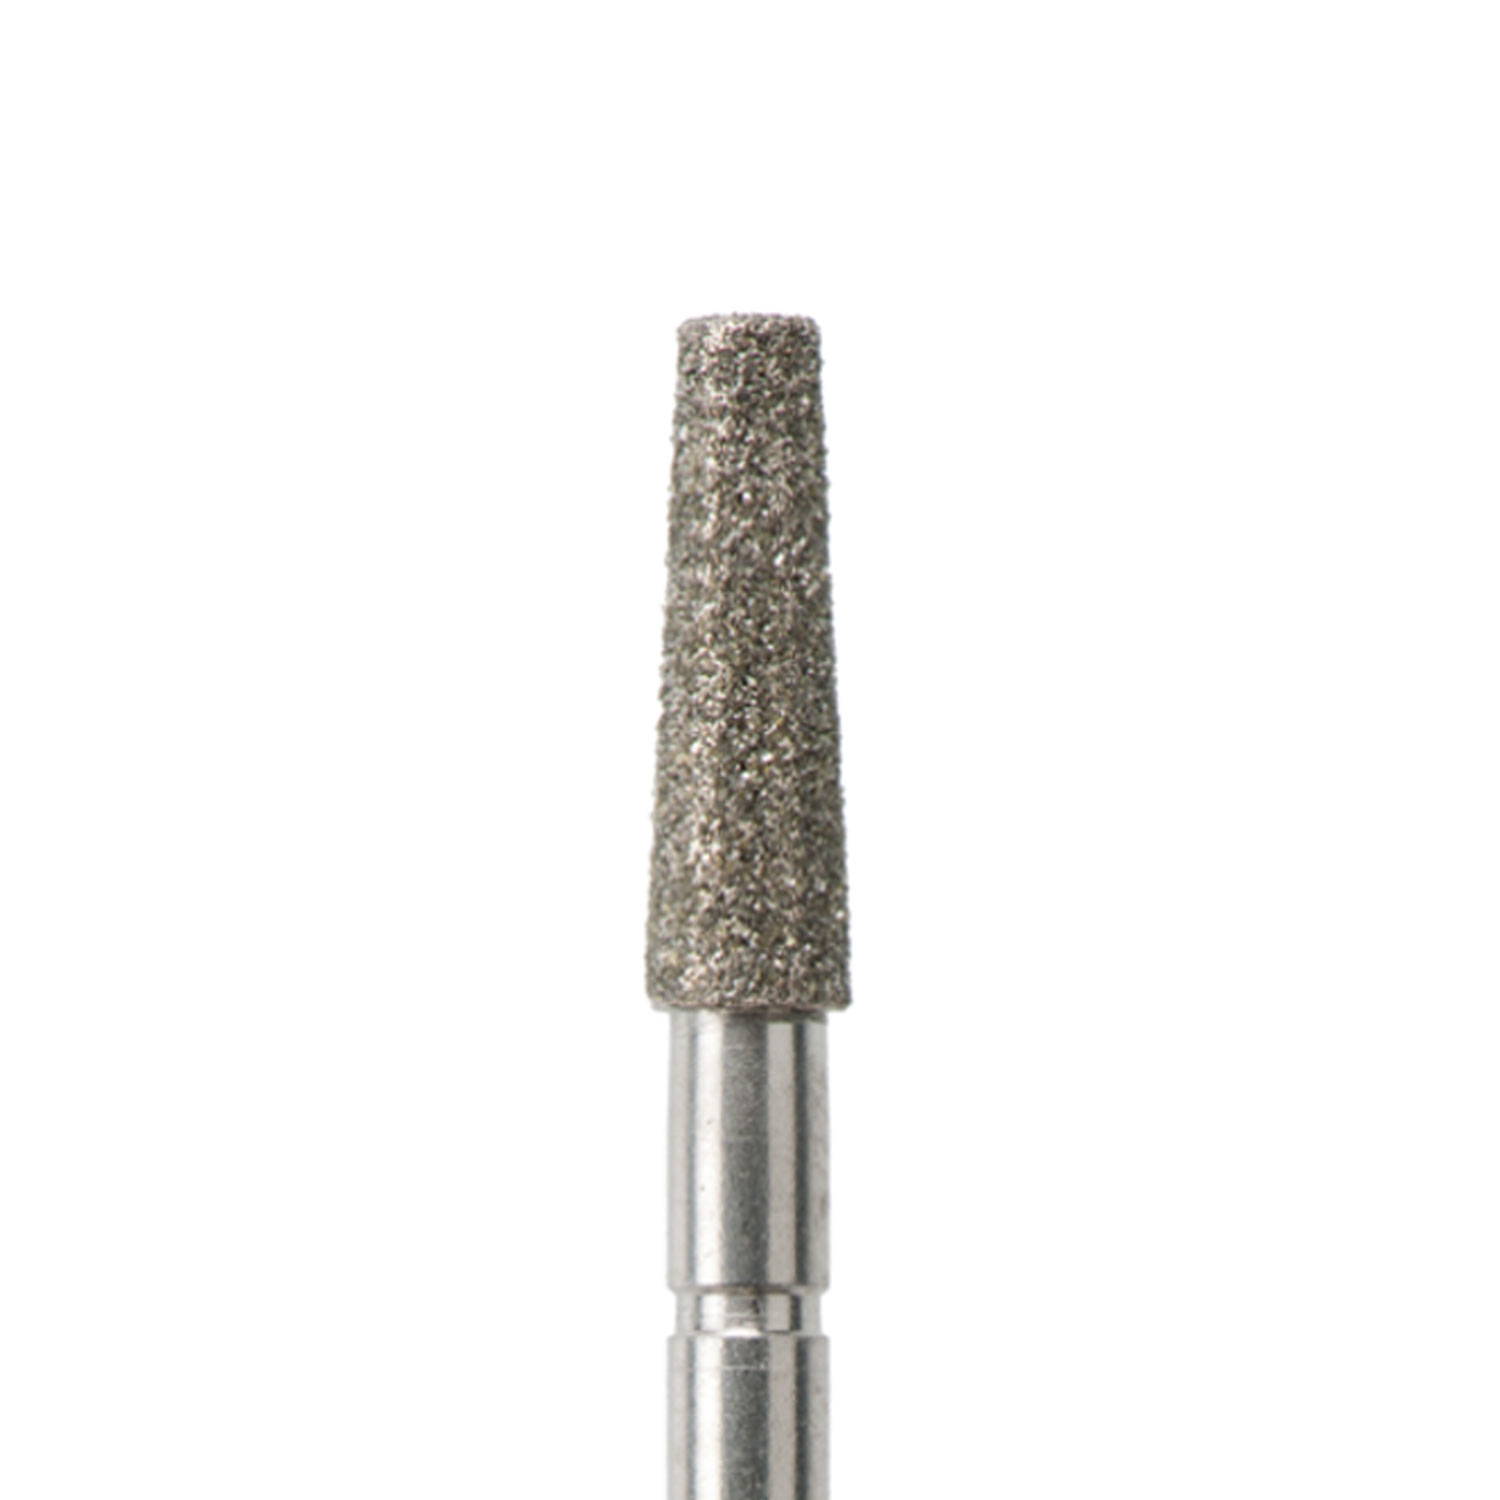 Acurata diamond instruments 524 - medium 3,1mm  AC-140 ACURATA - Arrow 524 Series - Medium (Silver Ring)